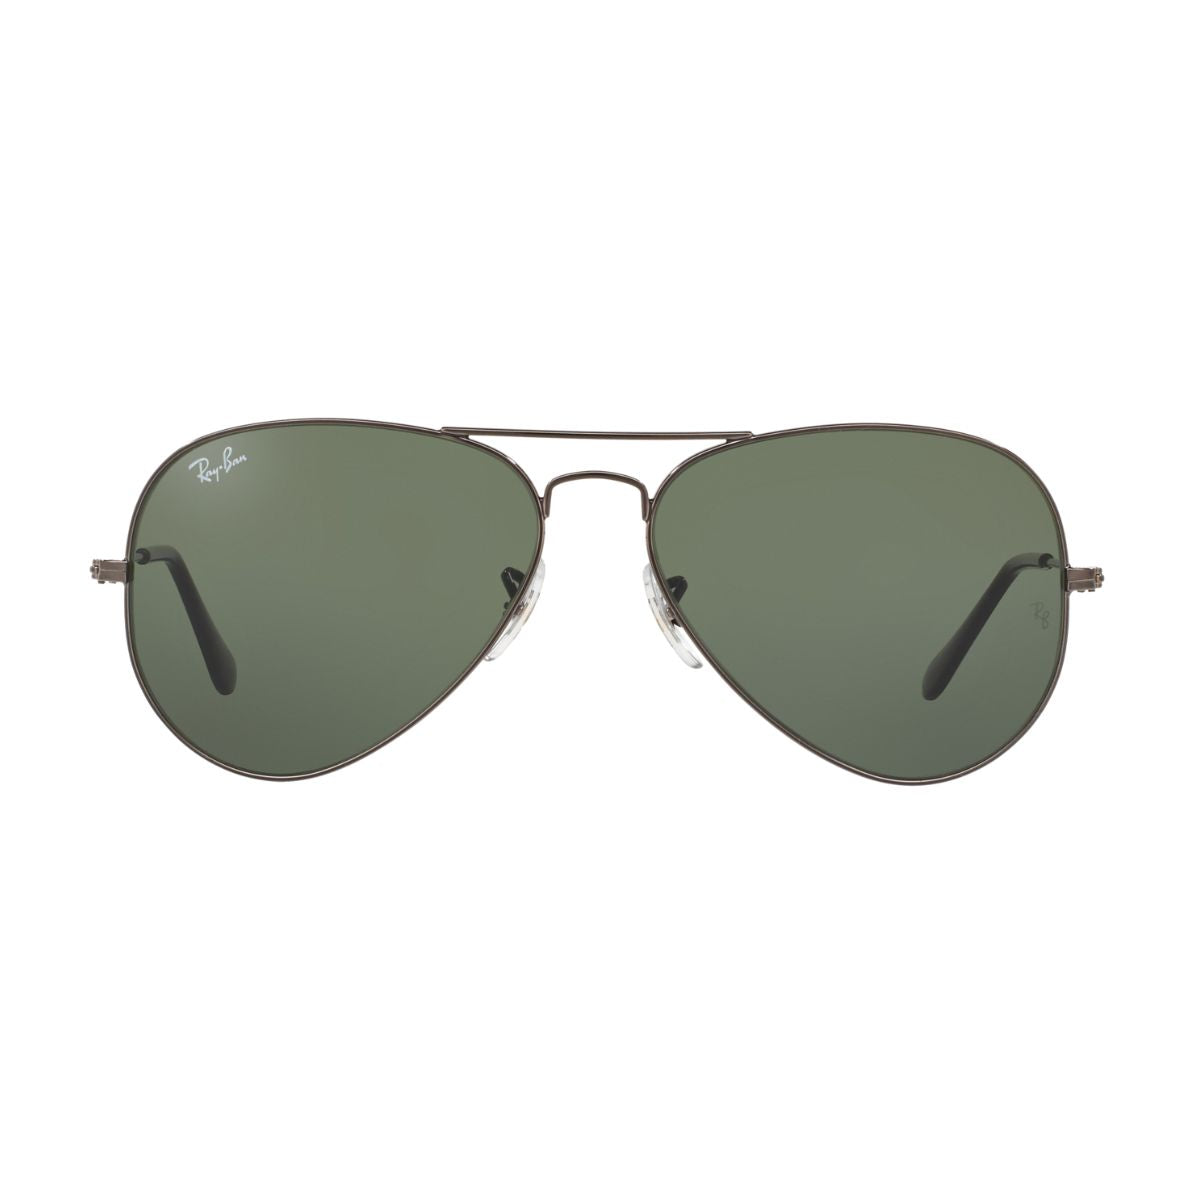 "Buy Rayban 3025 004 Staylish Sunglasses for Men's Online At Optorium"